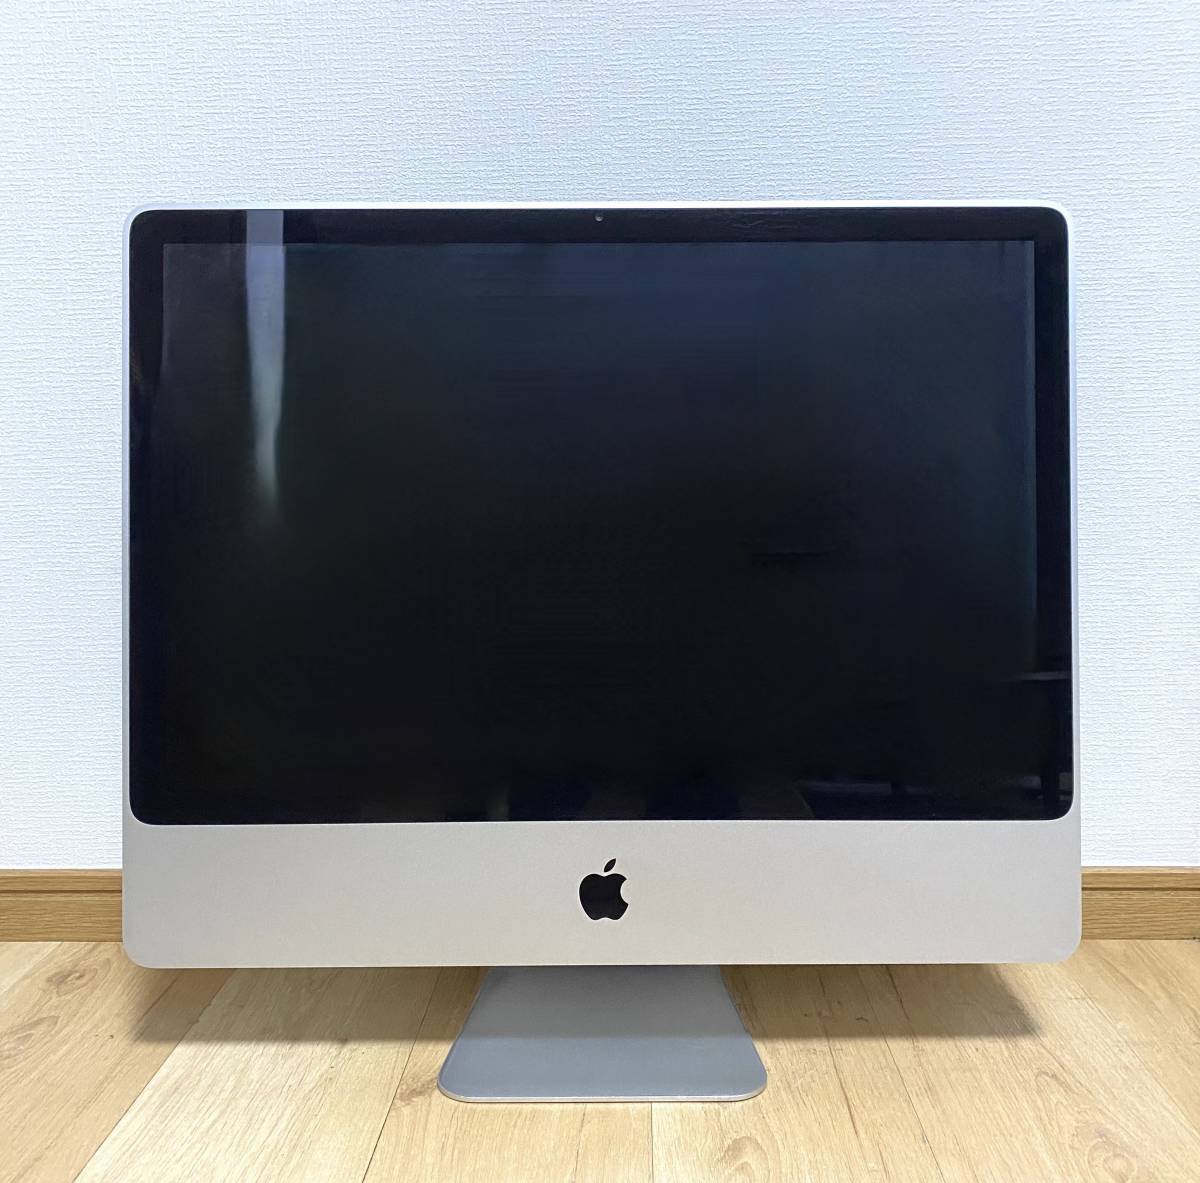 Apple iMac 24インチ MB418J/A 2.66 GHz メモリ増設済み 8GB HDD 640GB